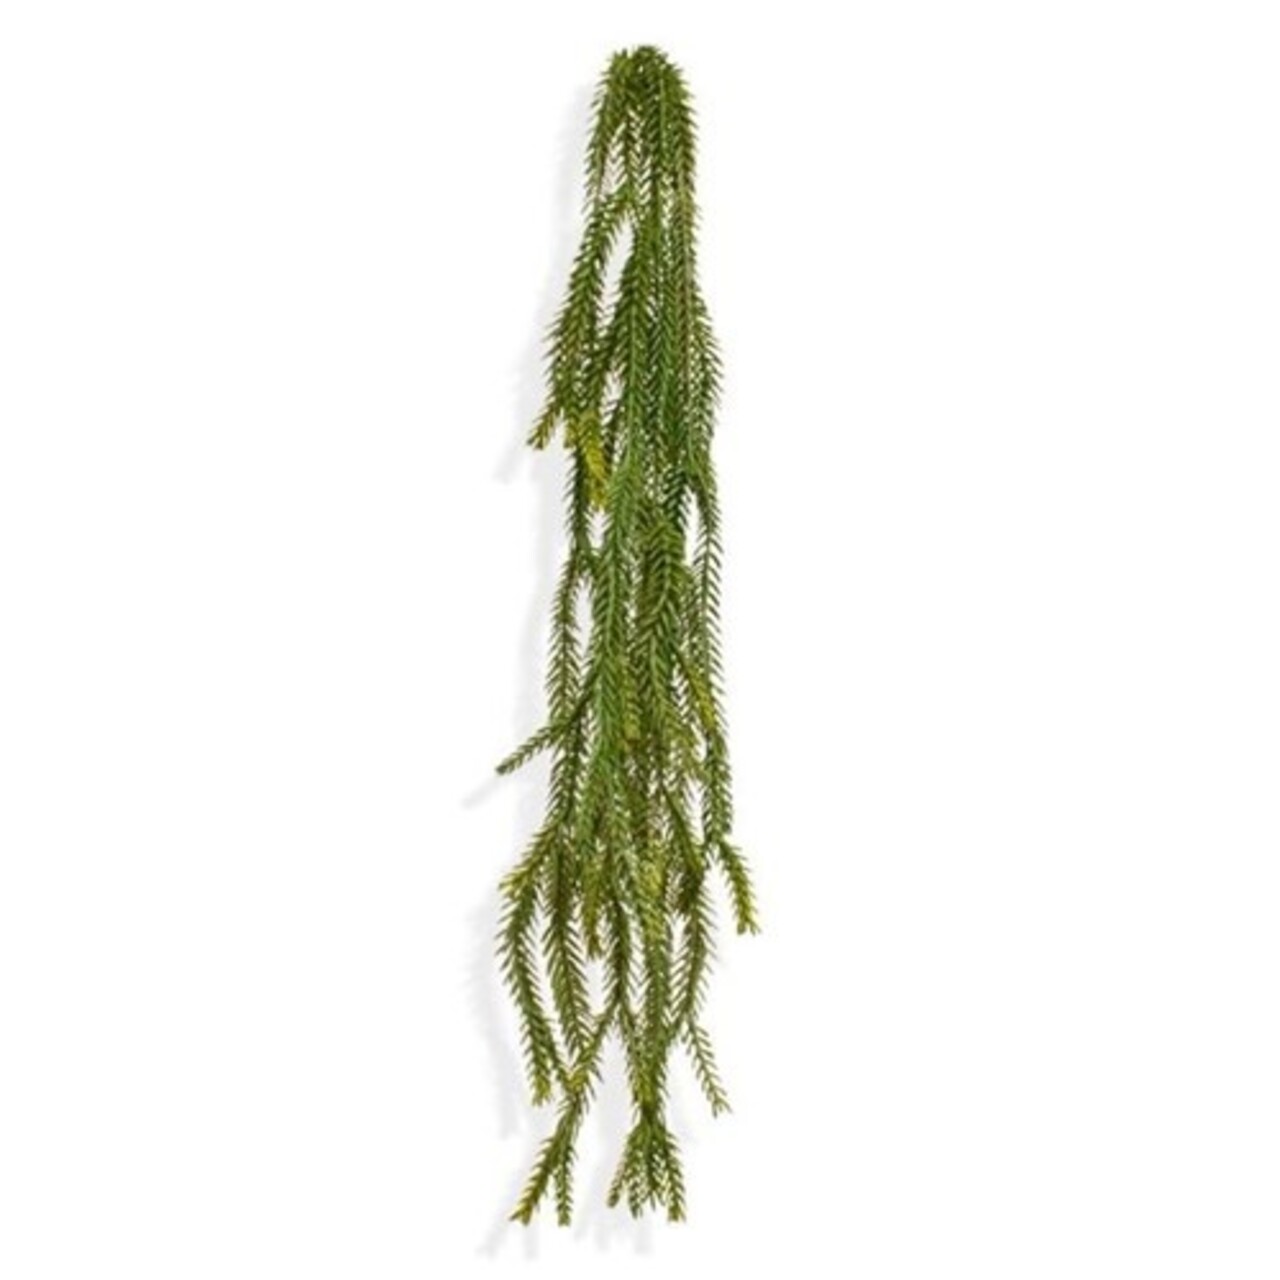 Asparagus Foxtail kunst hangplant 60 cm - groen